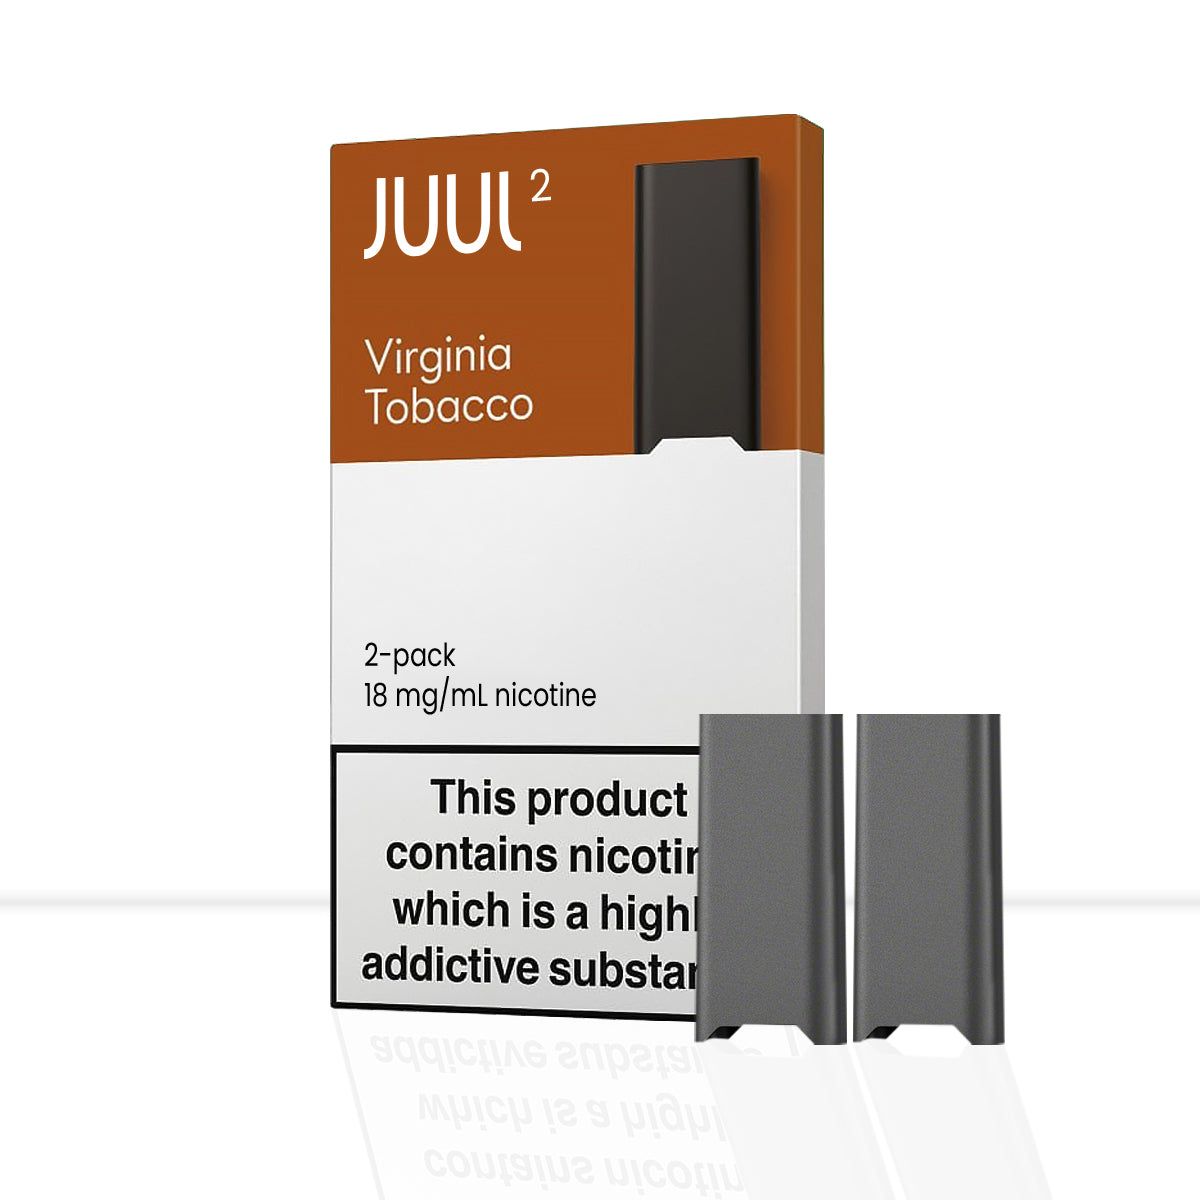 Juul2 Virginia Tobacco Vape Pods